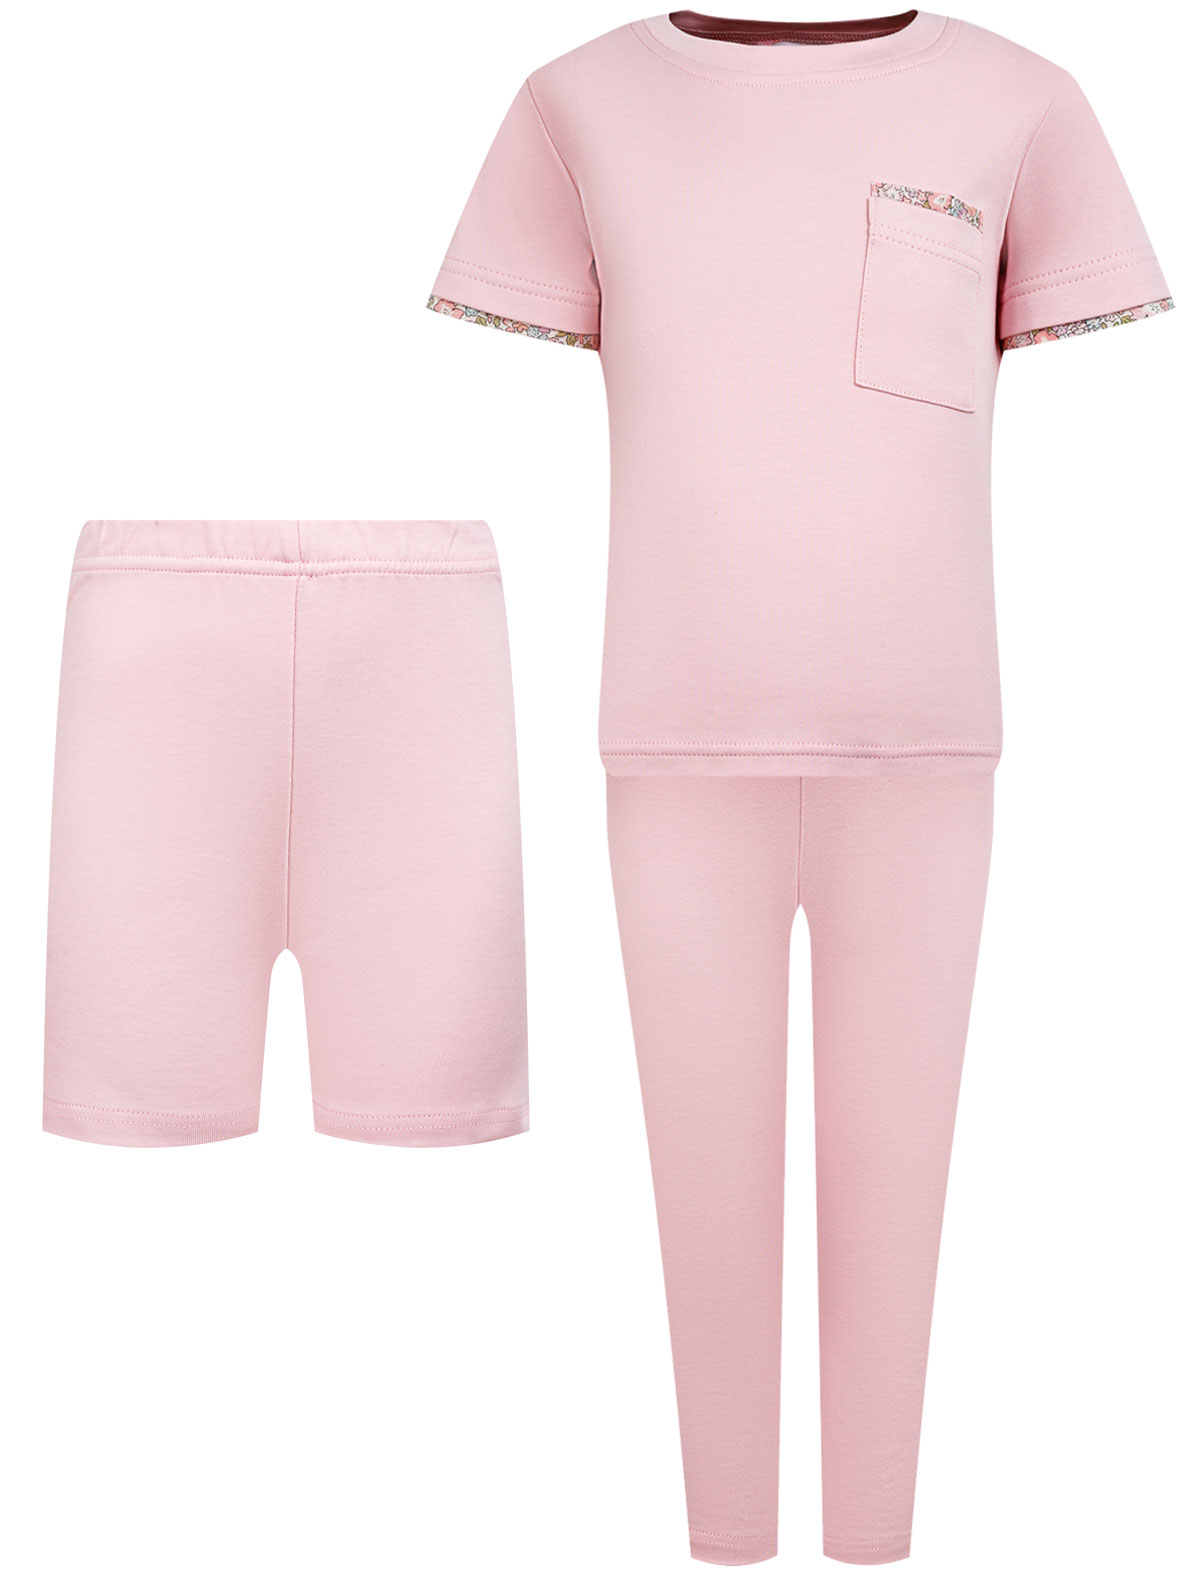 Пижама Backary розового цвета